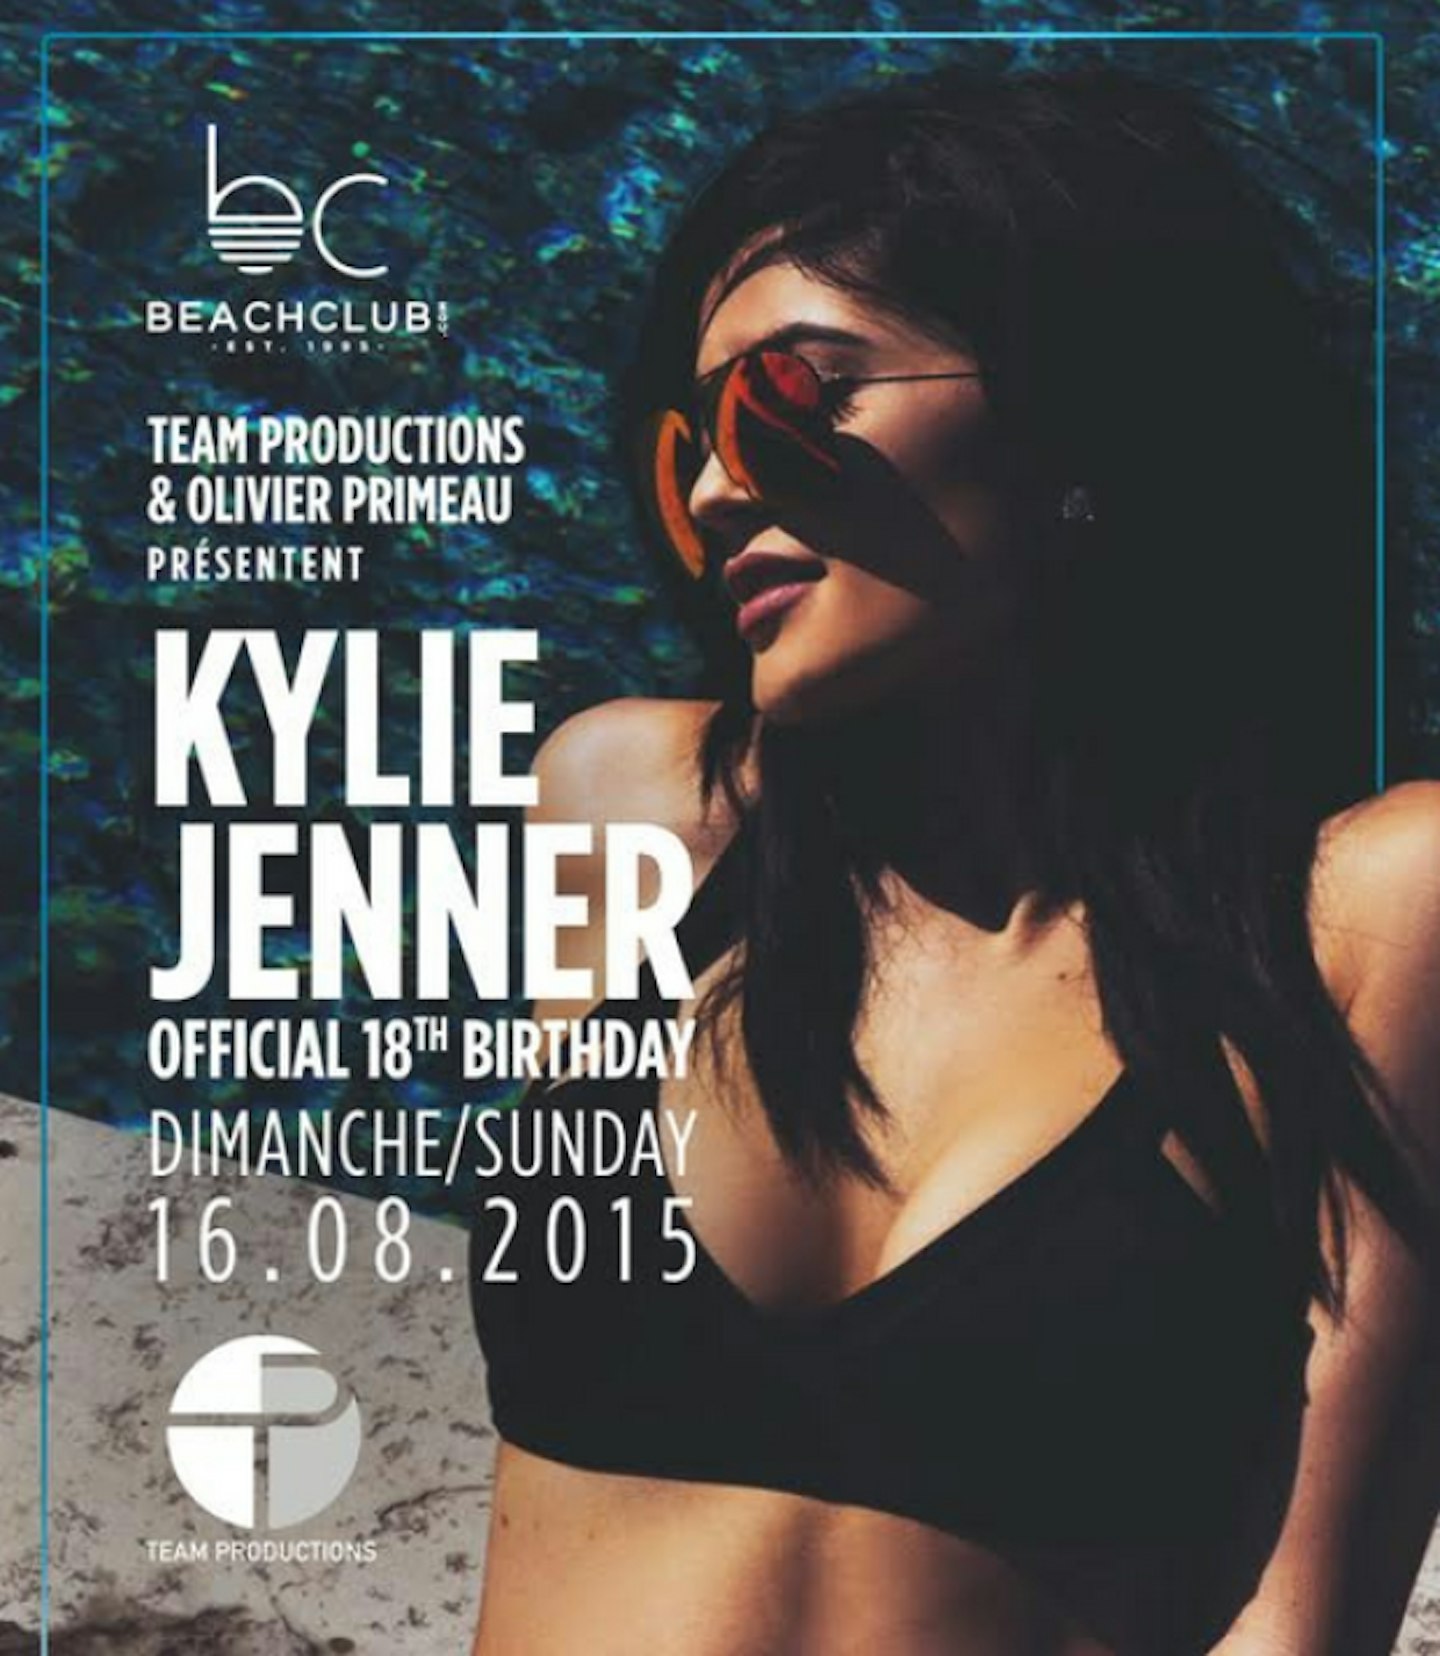 Kylie Jenner 18th birthday_1655x929